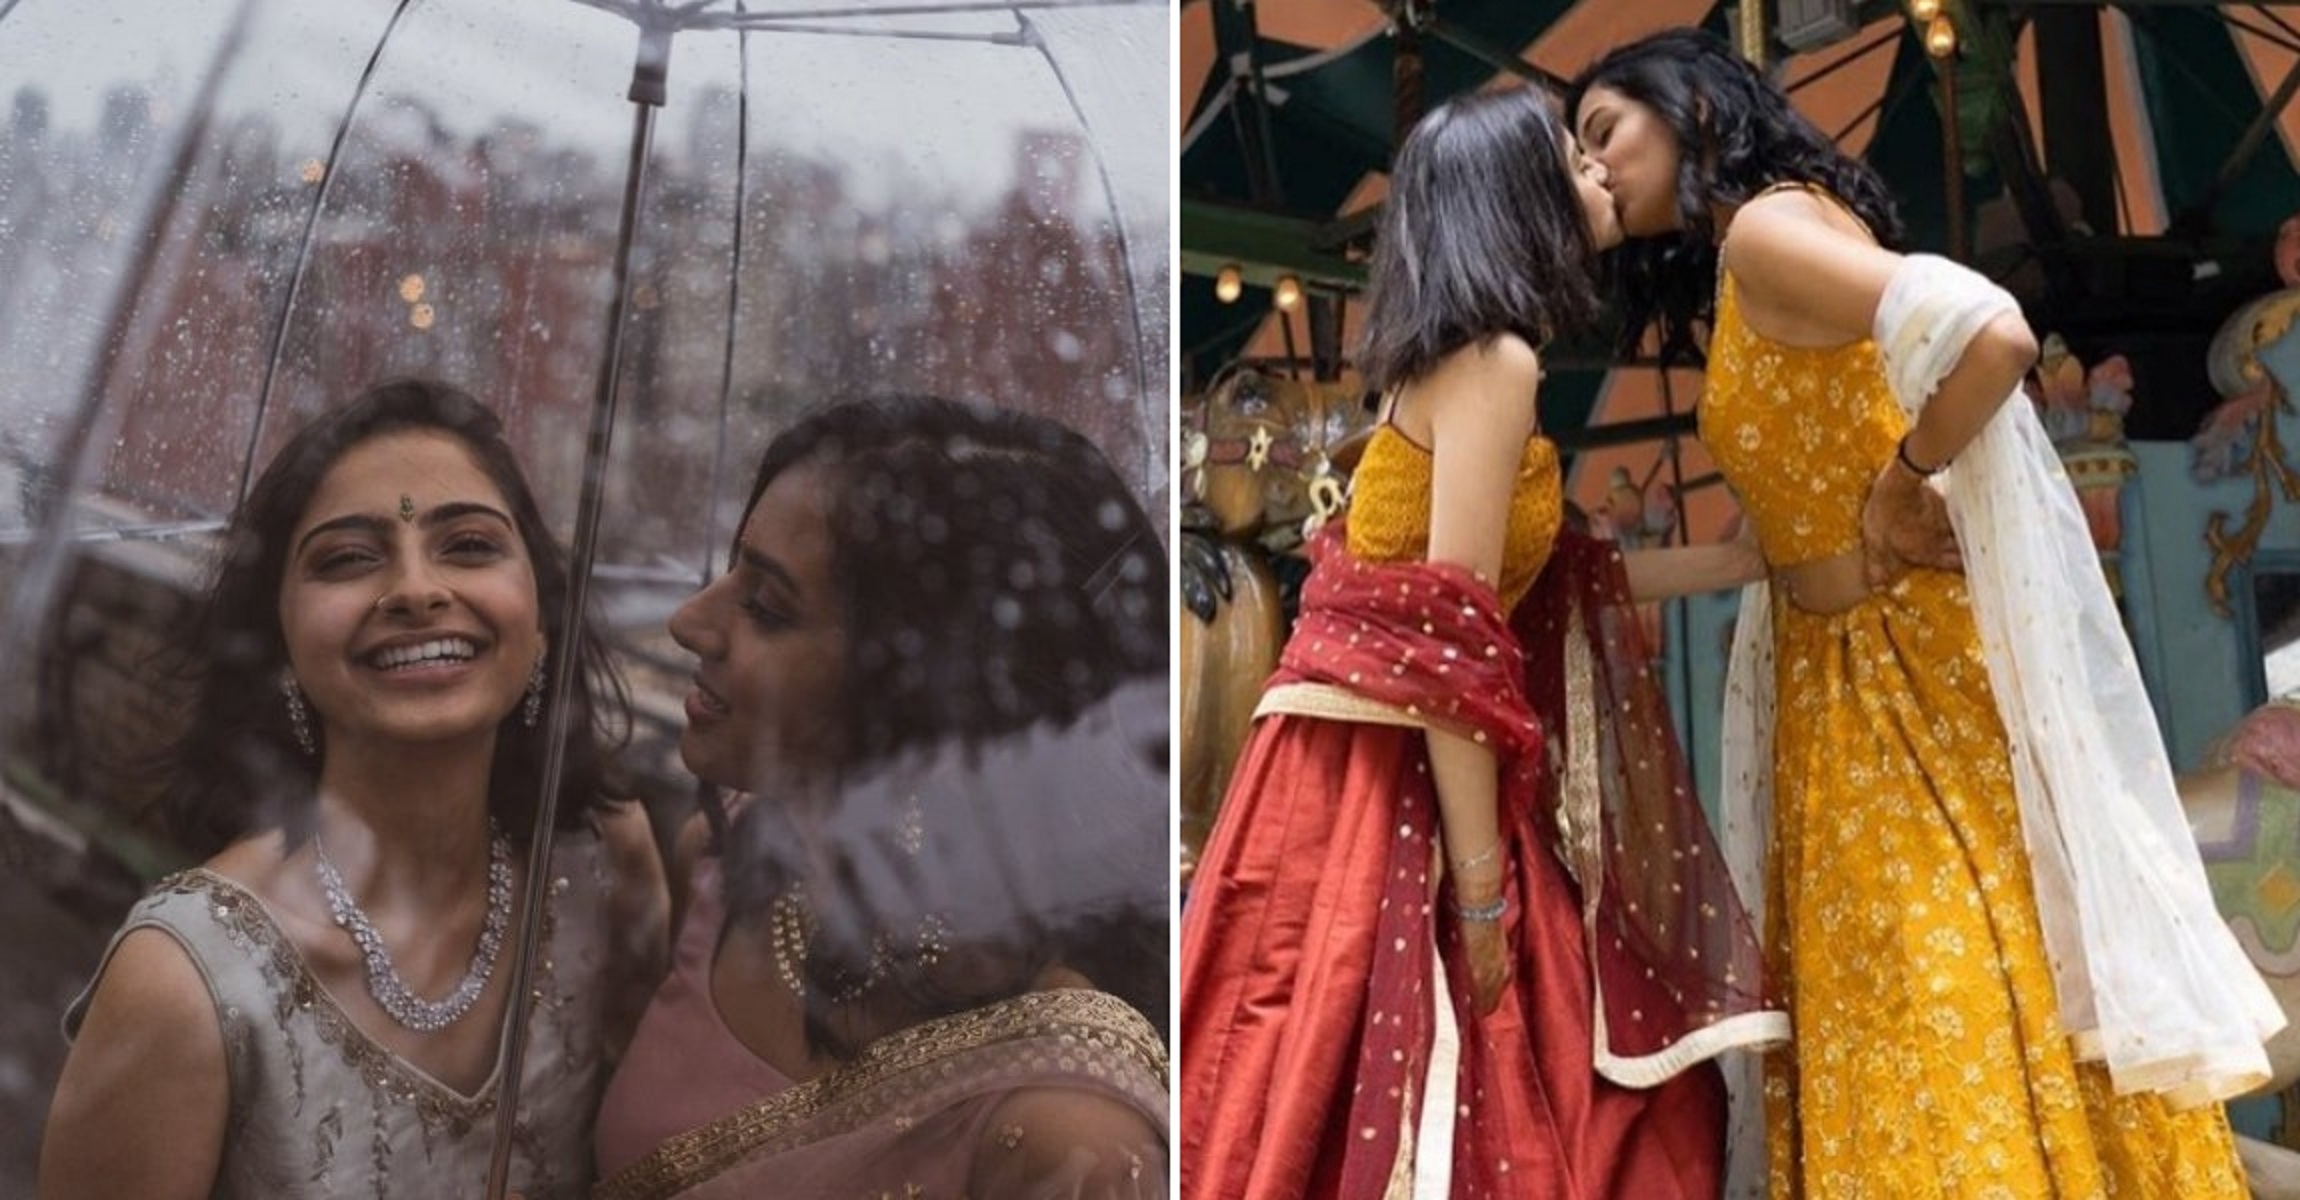 Musalmani Sexy Video Pakistan - Indian Hindu Girl's Love Story With Pakistani Muslim Woman Is ...